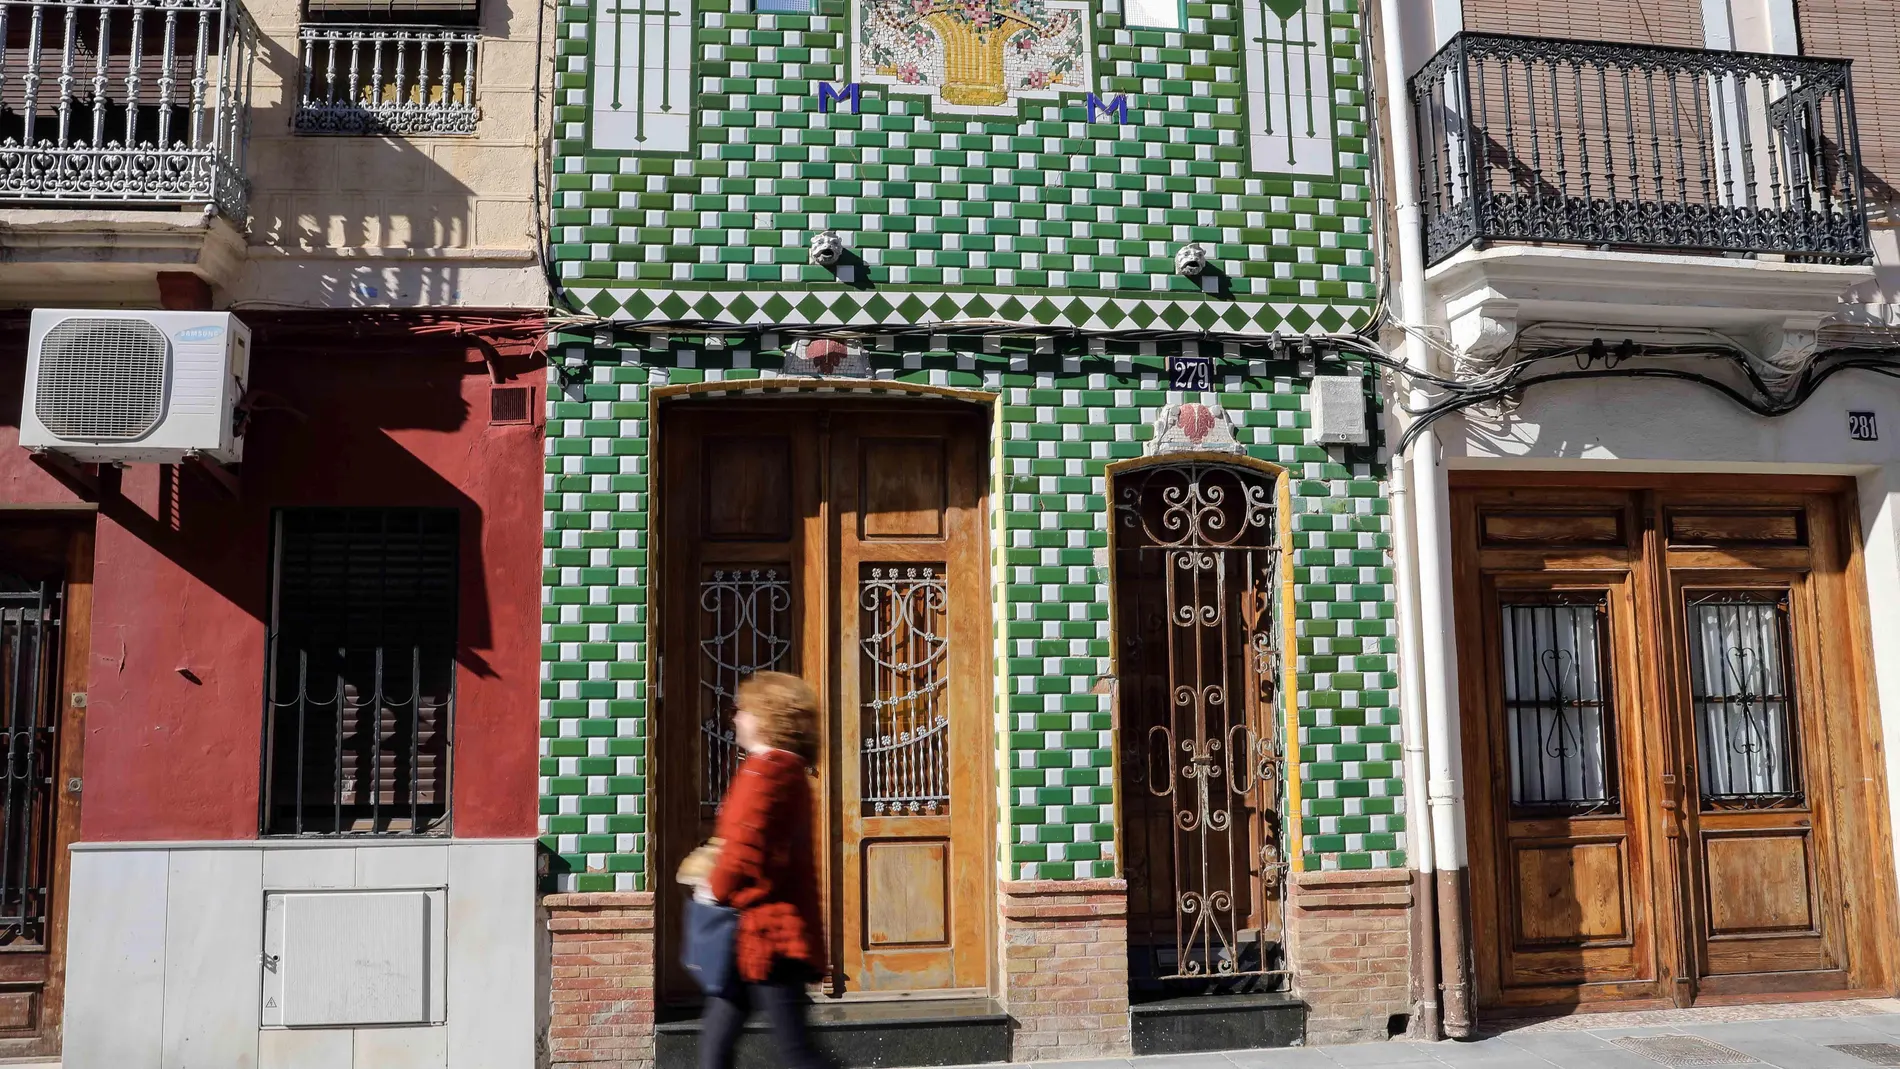 "The Guardian" elige el Cabanyal de València entre los barrios mas "cool" de Europa